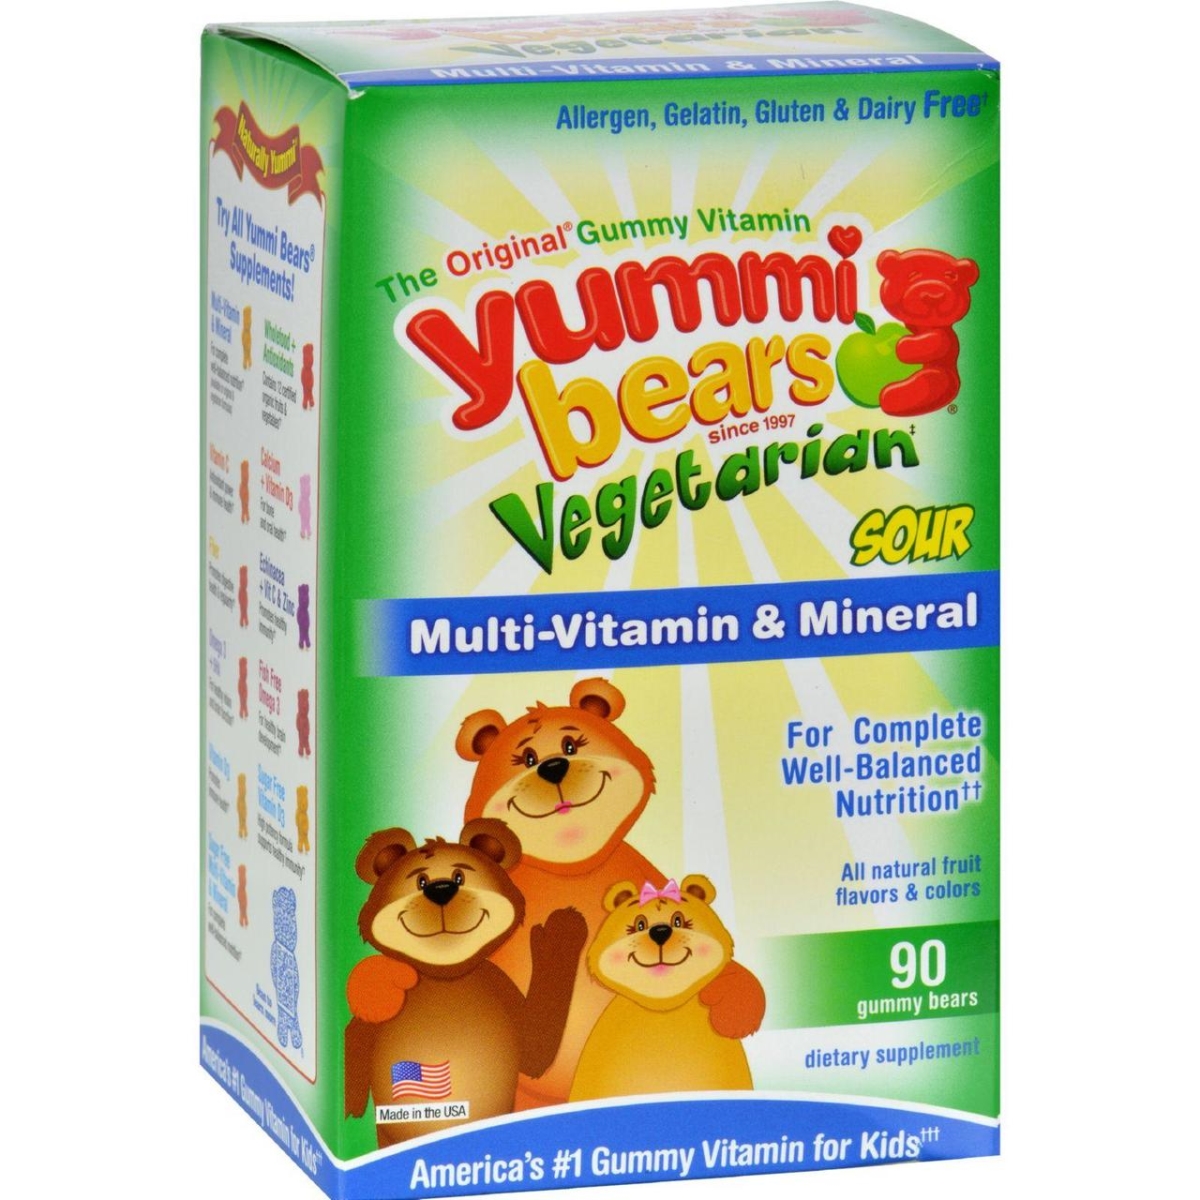 Hg0394312 Yummi Bears Multi-vitamin & Mineral Vegetarian Fruit, 90 Gummy Bears